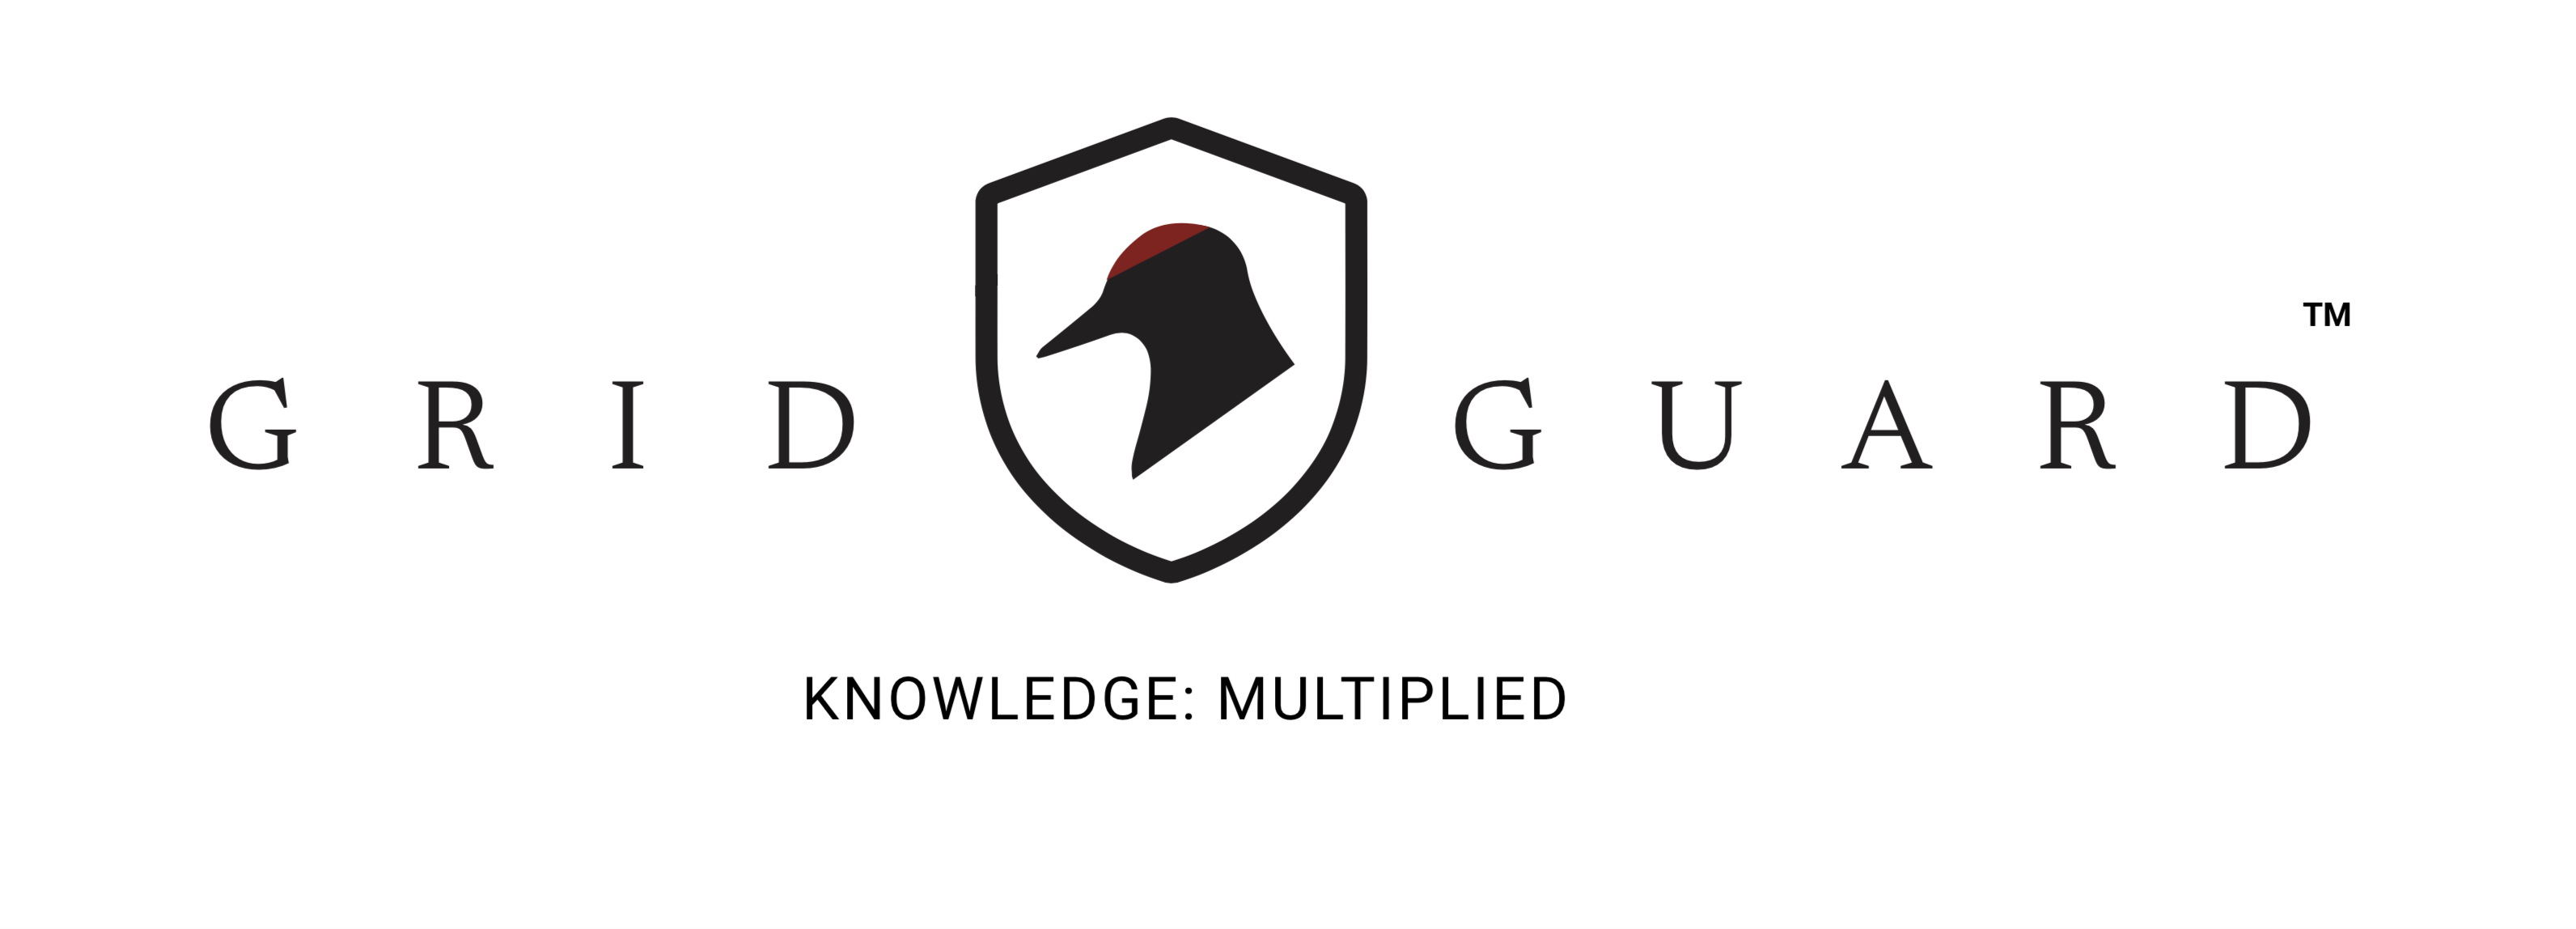 Gridguard full logo